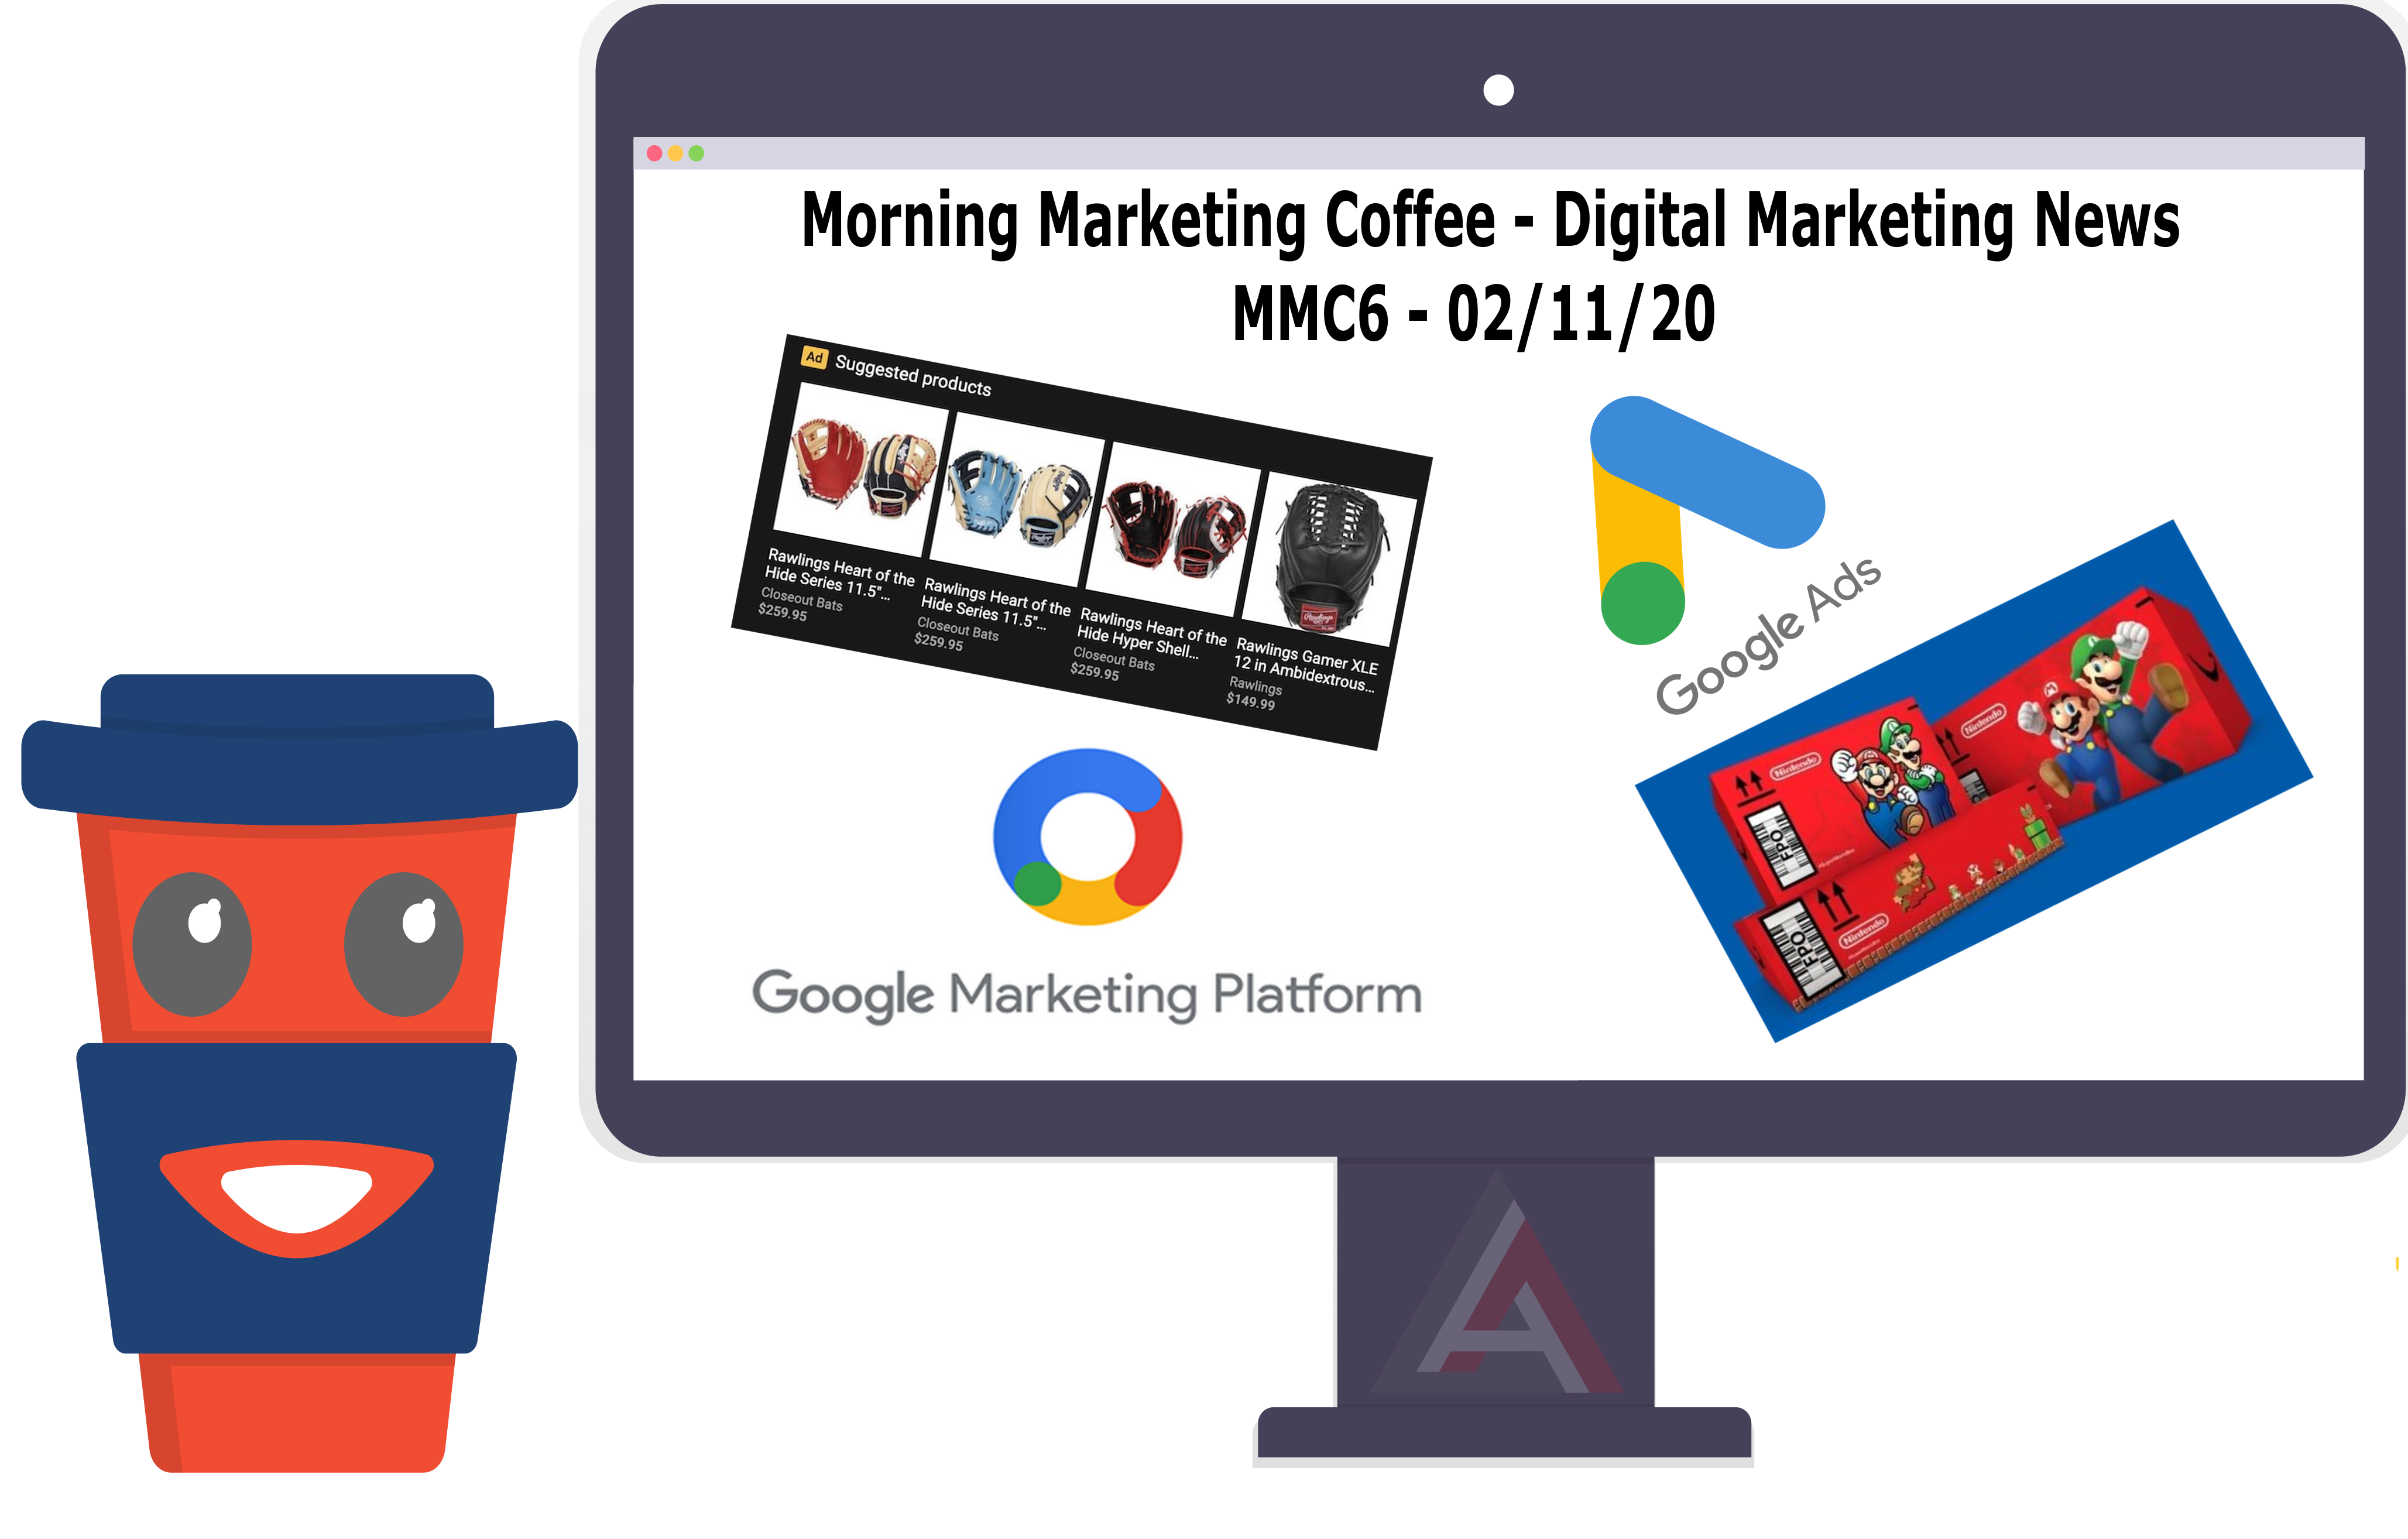 Google Ads feed management, Google Marketing Platform, Removing content from Google & More – [MMC-6]